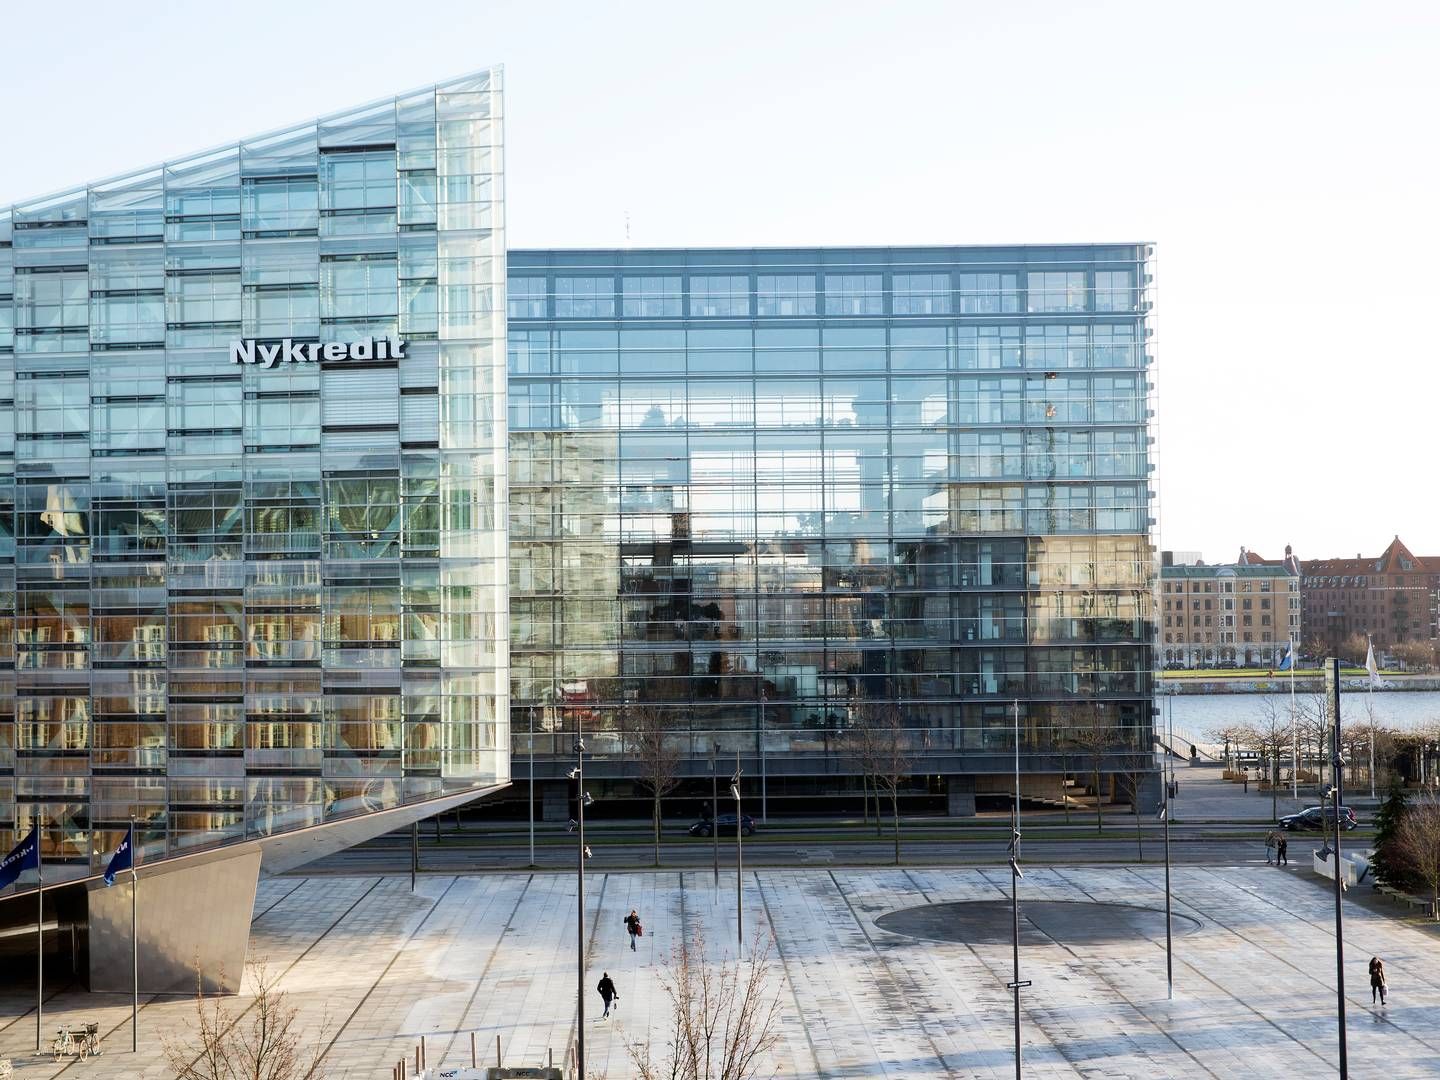 Nykredit's headquarters in Copenhagen. | Photo: Thomas Borberg